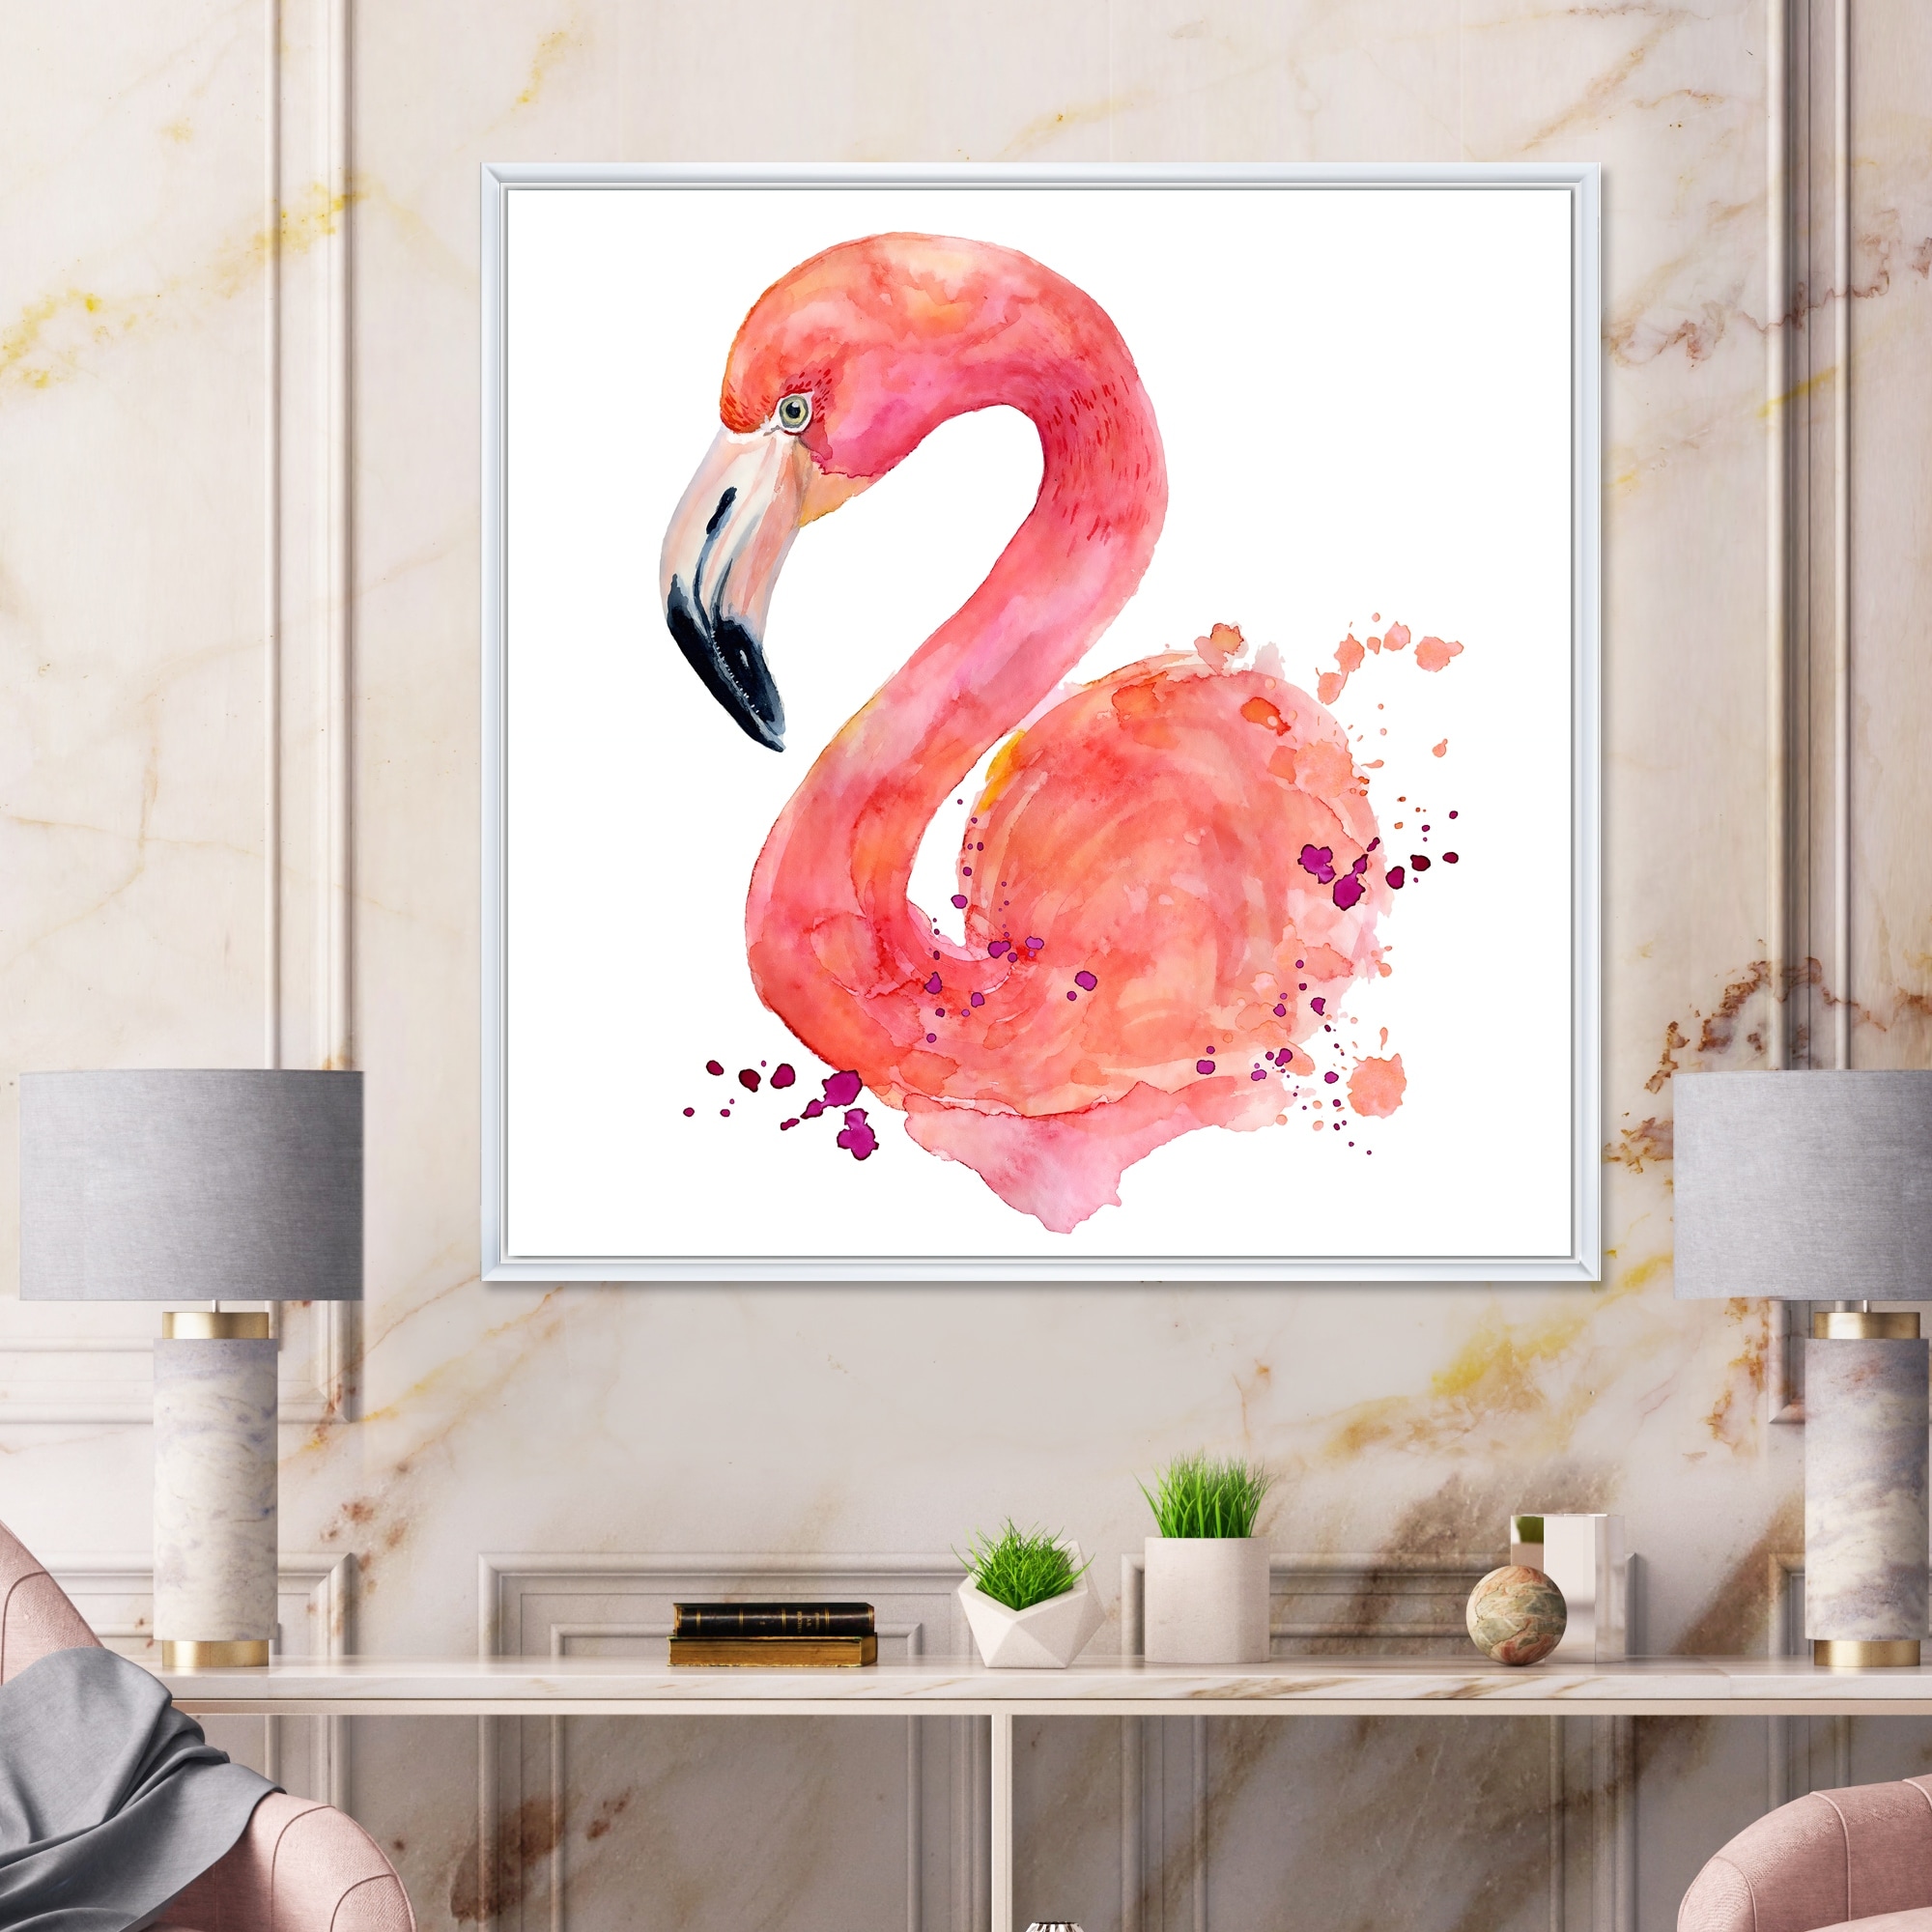 Classic Style Pink Flamingo Model